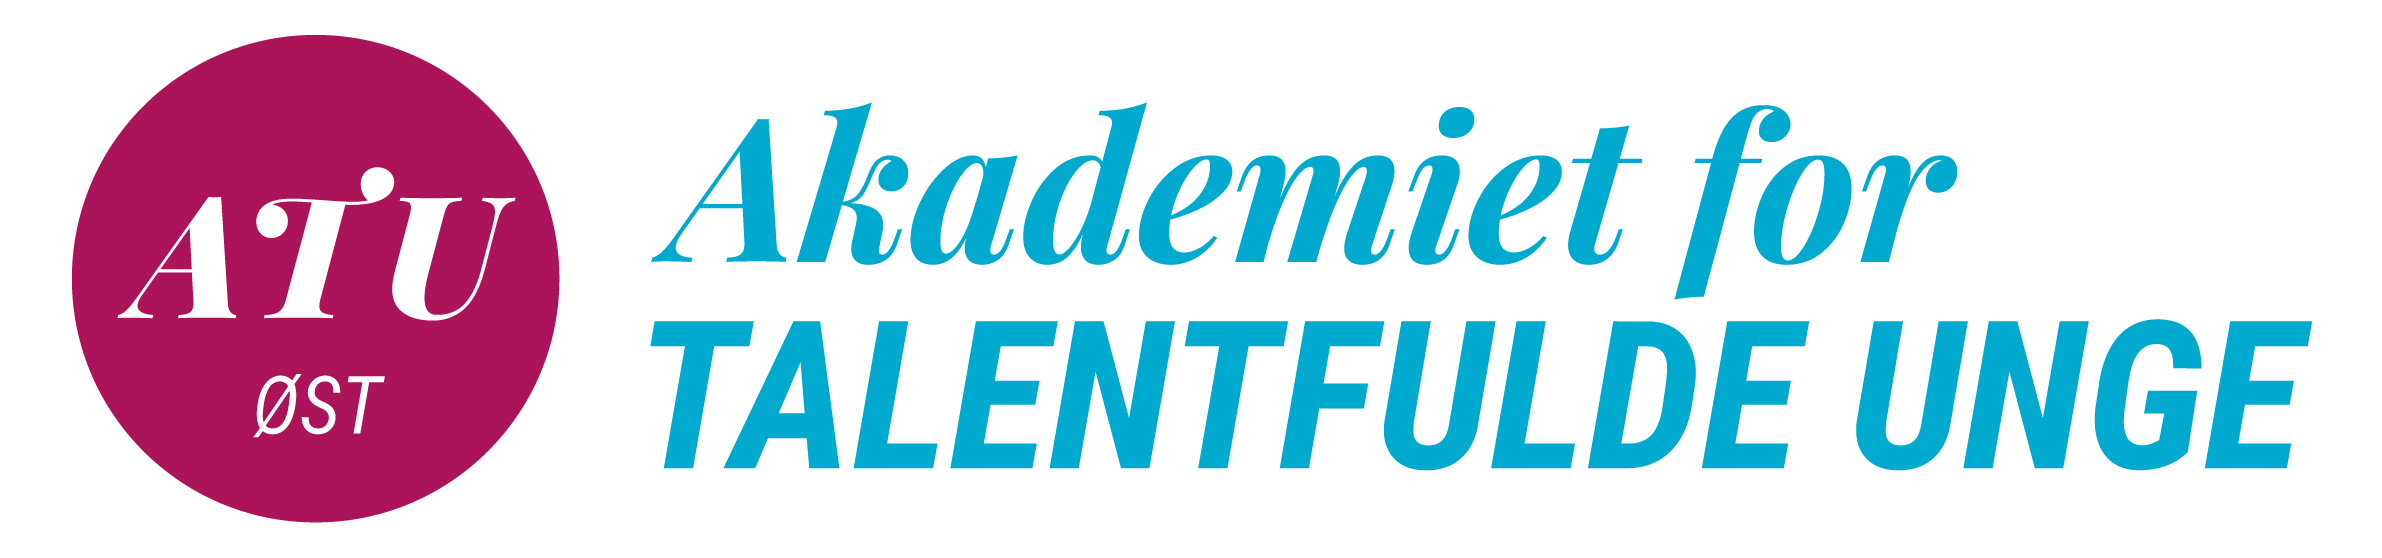 Akademiet for talentfulde unge logo